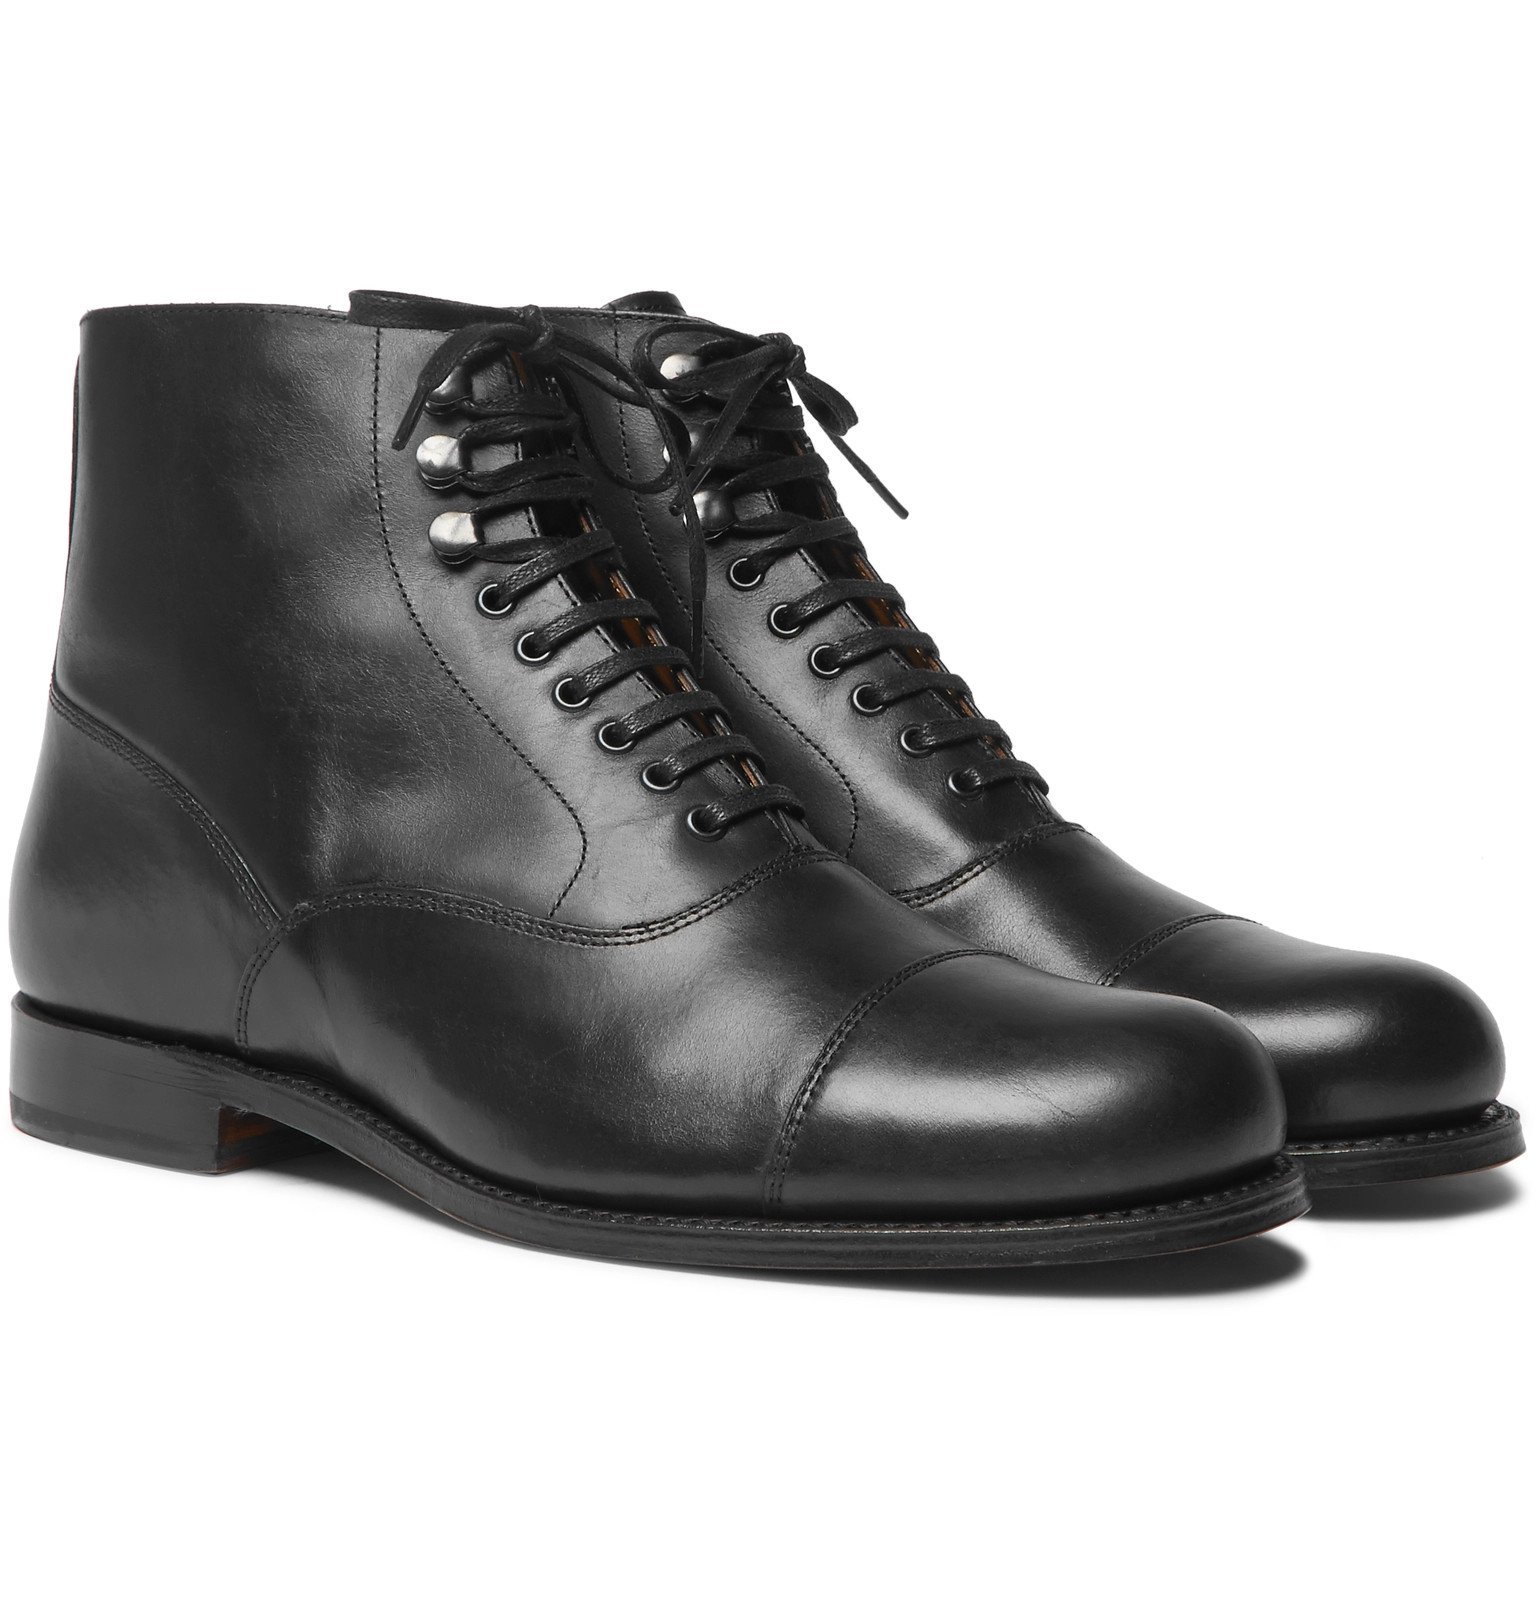 Grenson - Leander Cap-Toe Leather Boots - Black Grenson